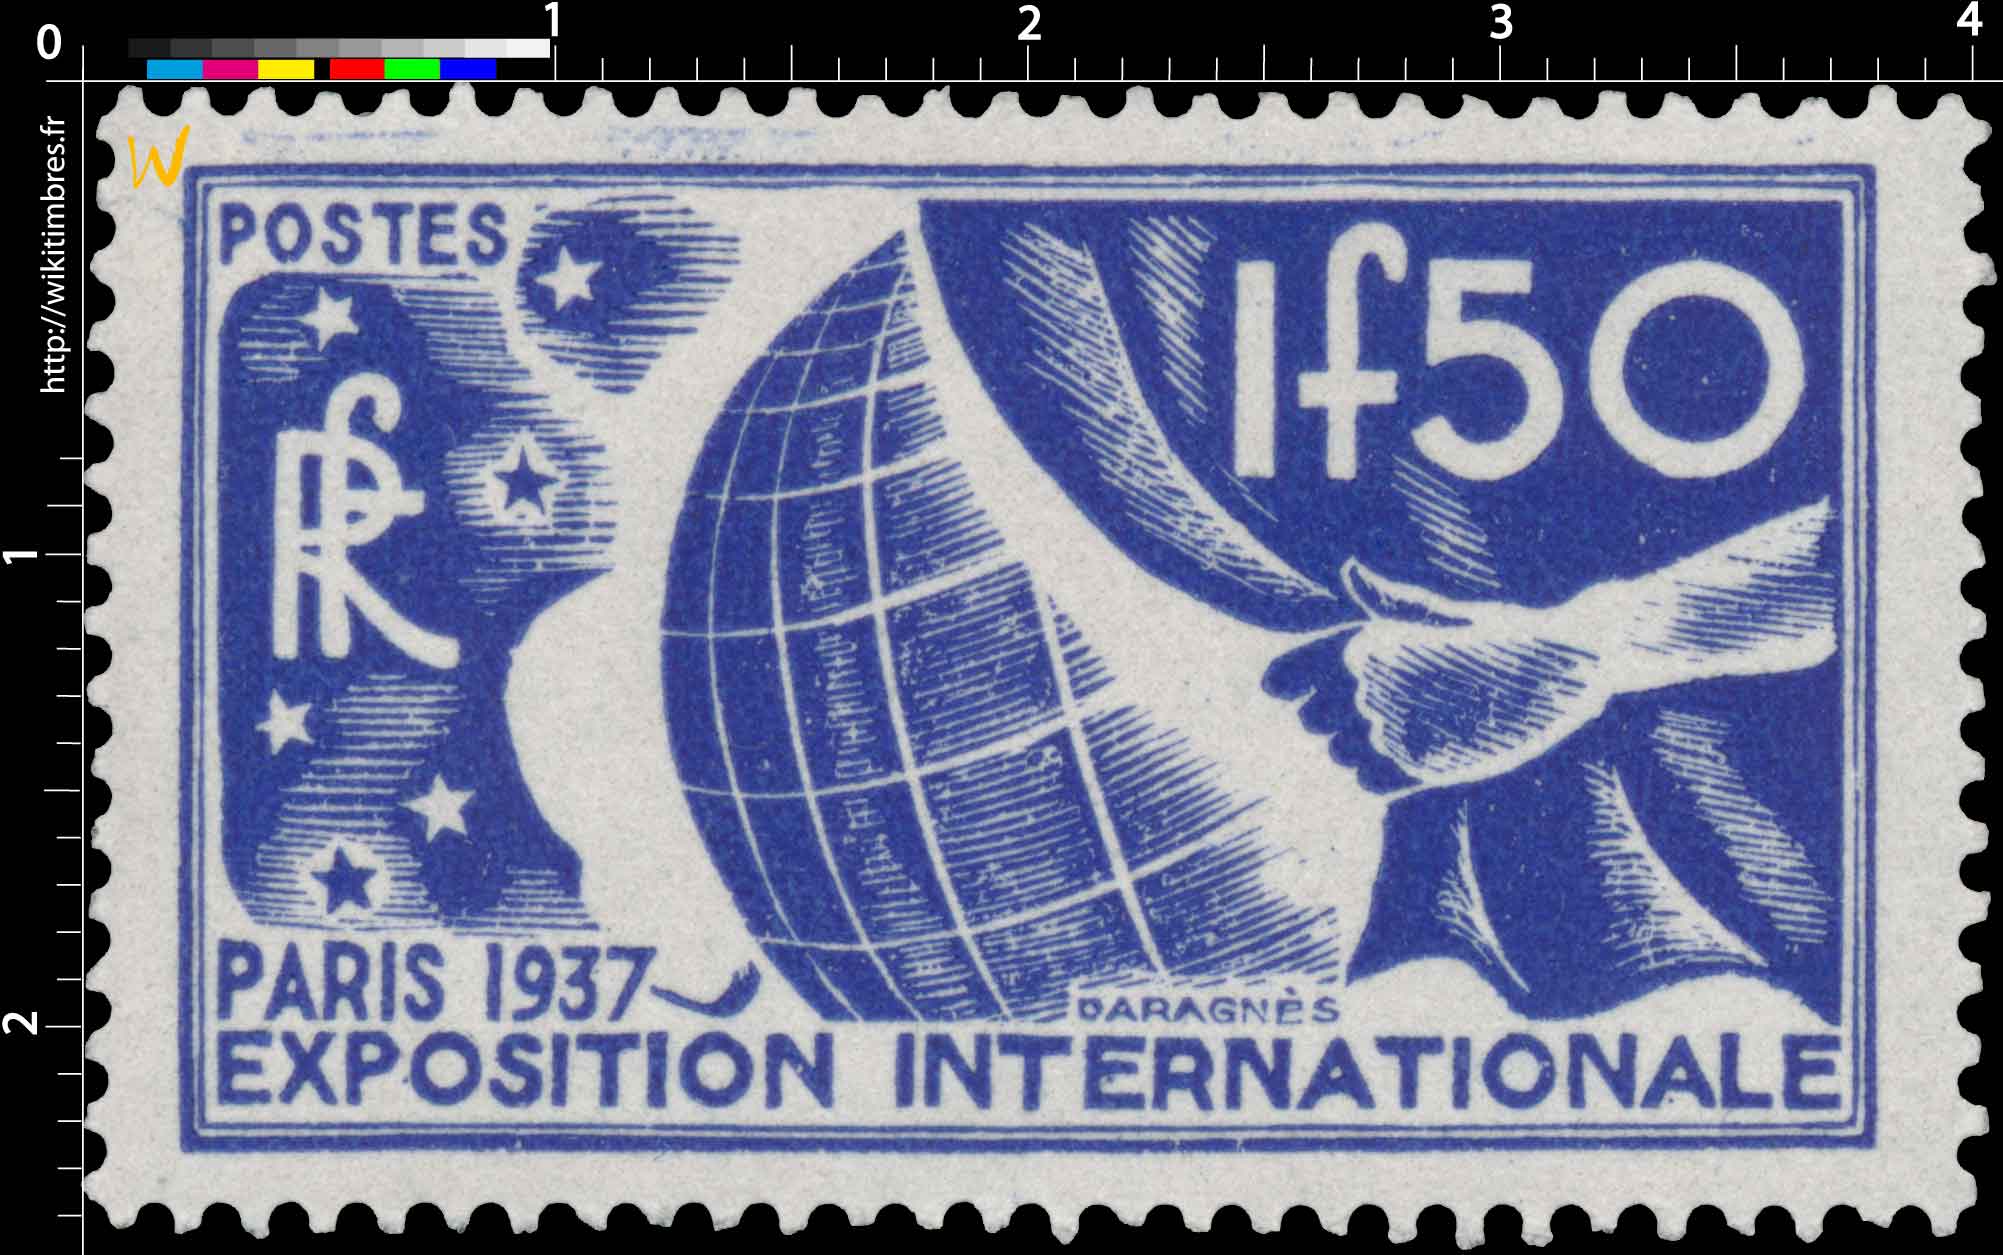 PARIS 1937 EXPOSITION INTERNATIONALE